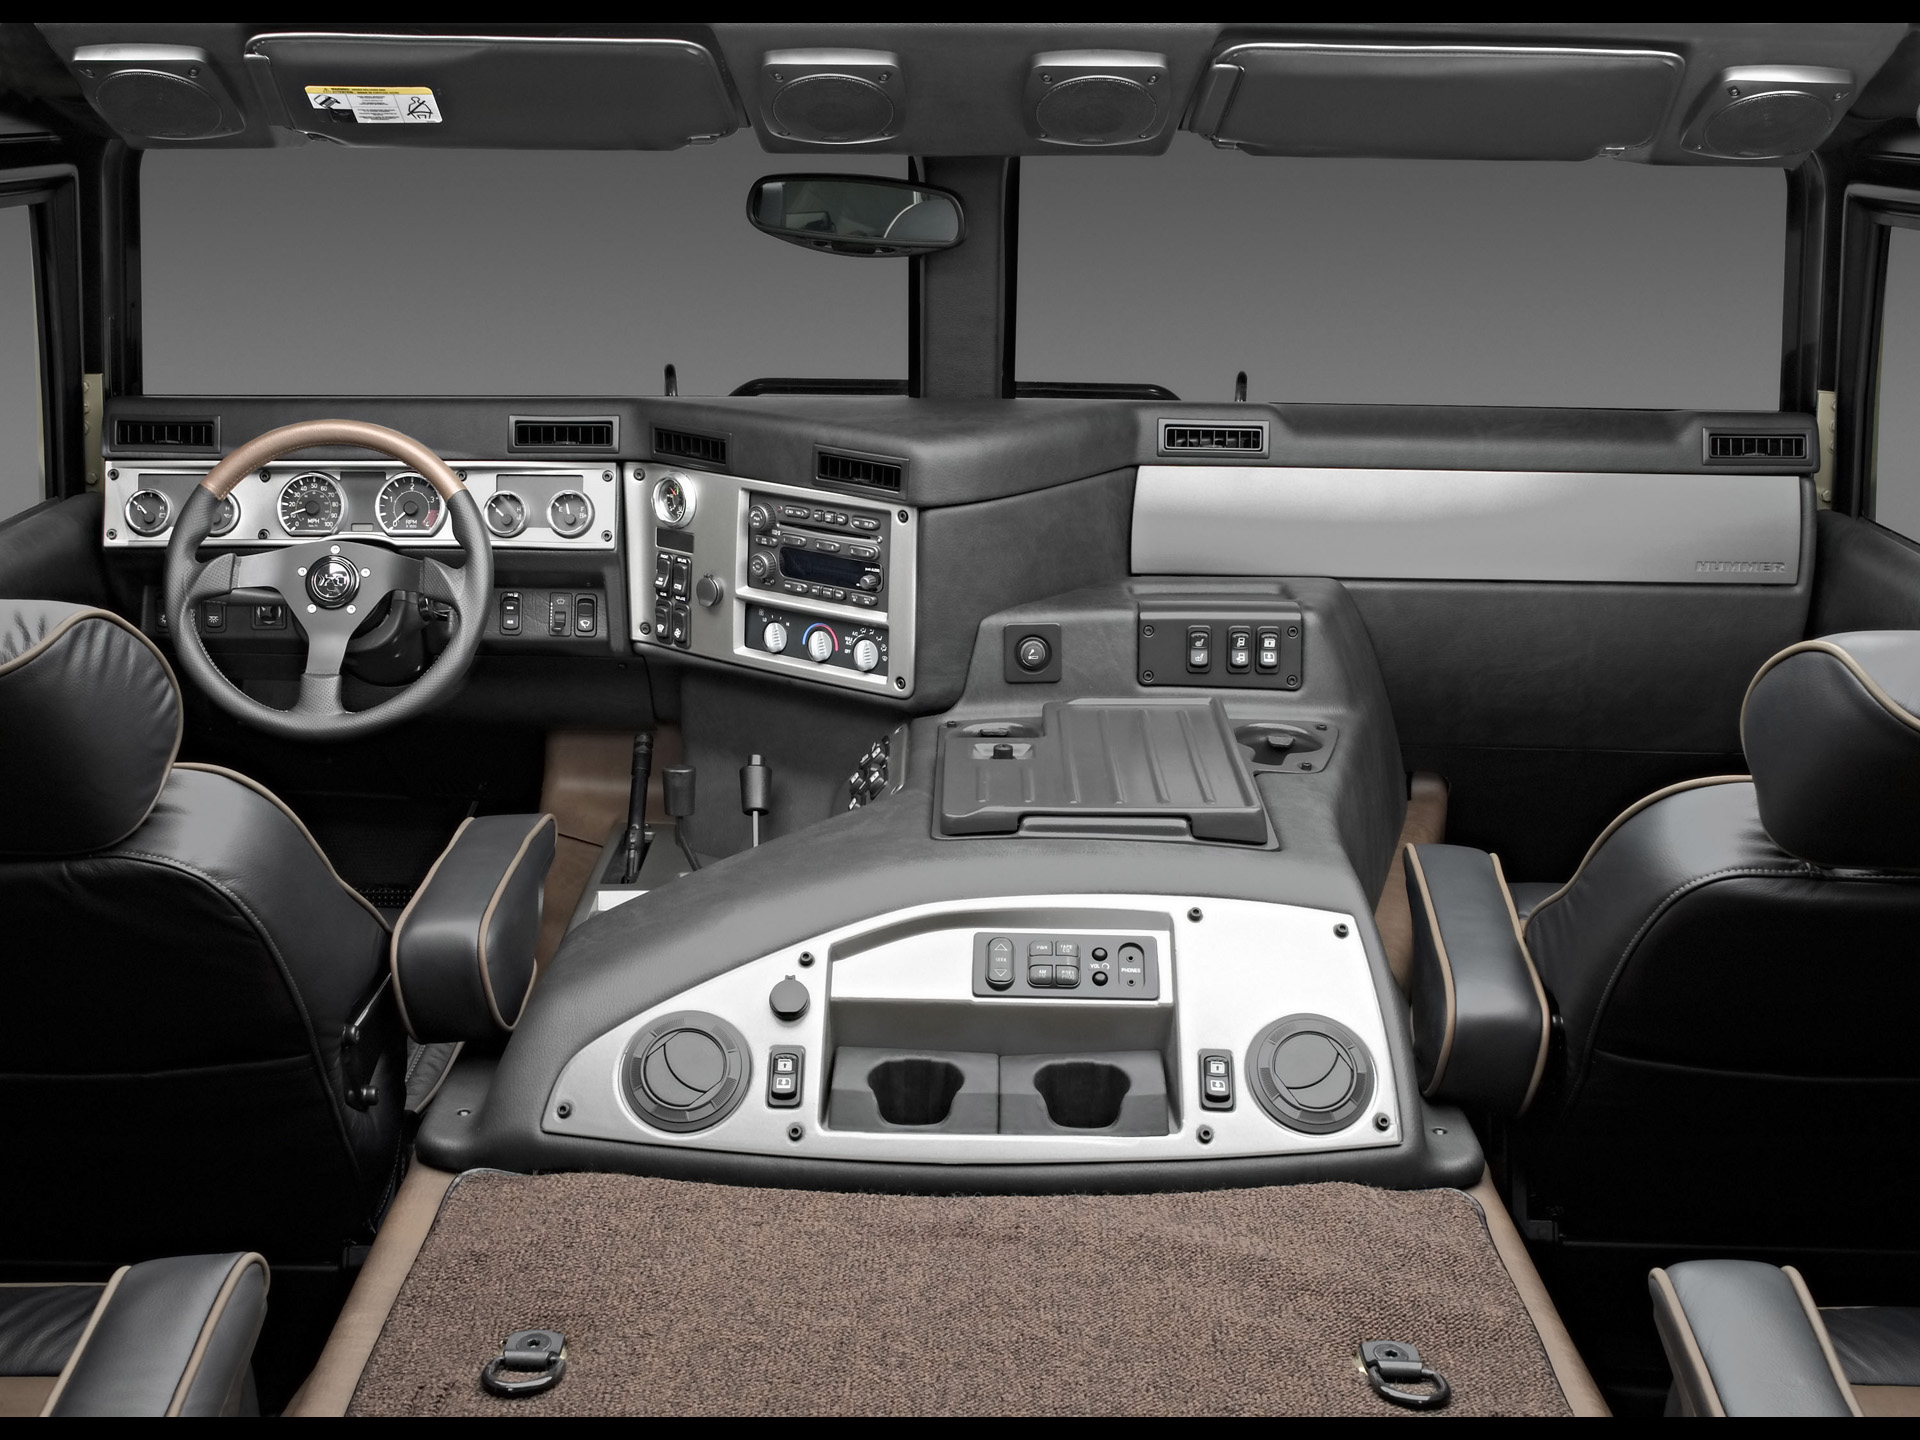 2004 Hummer H1 Interior. X04HM_H1014